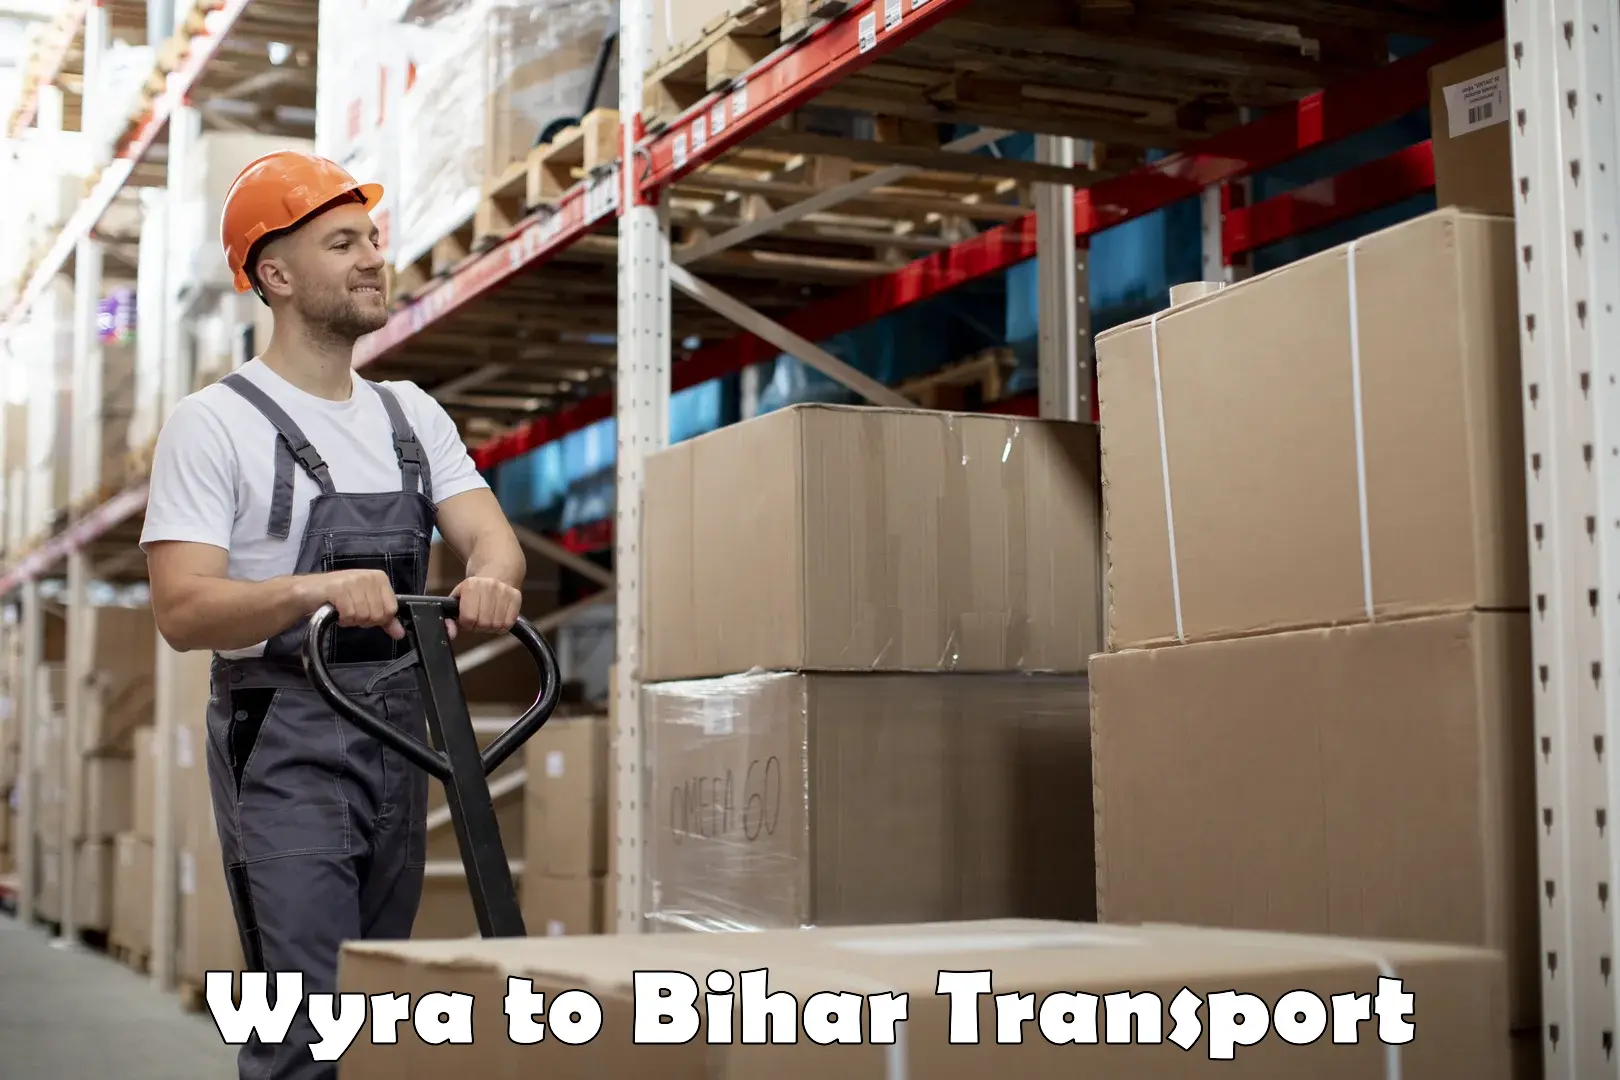 Transport in sharing Wyra to Madhubani